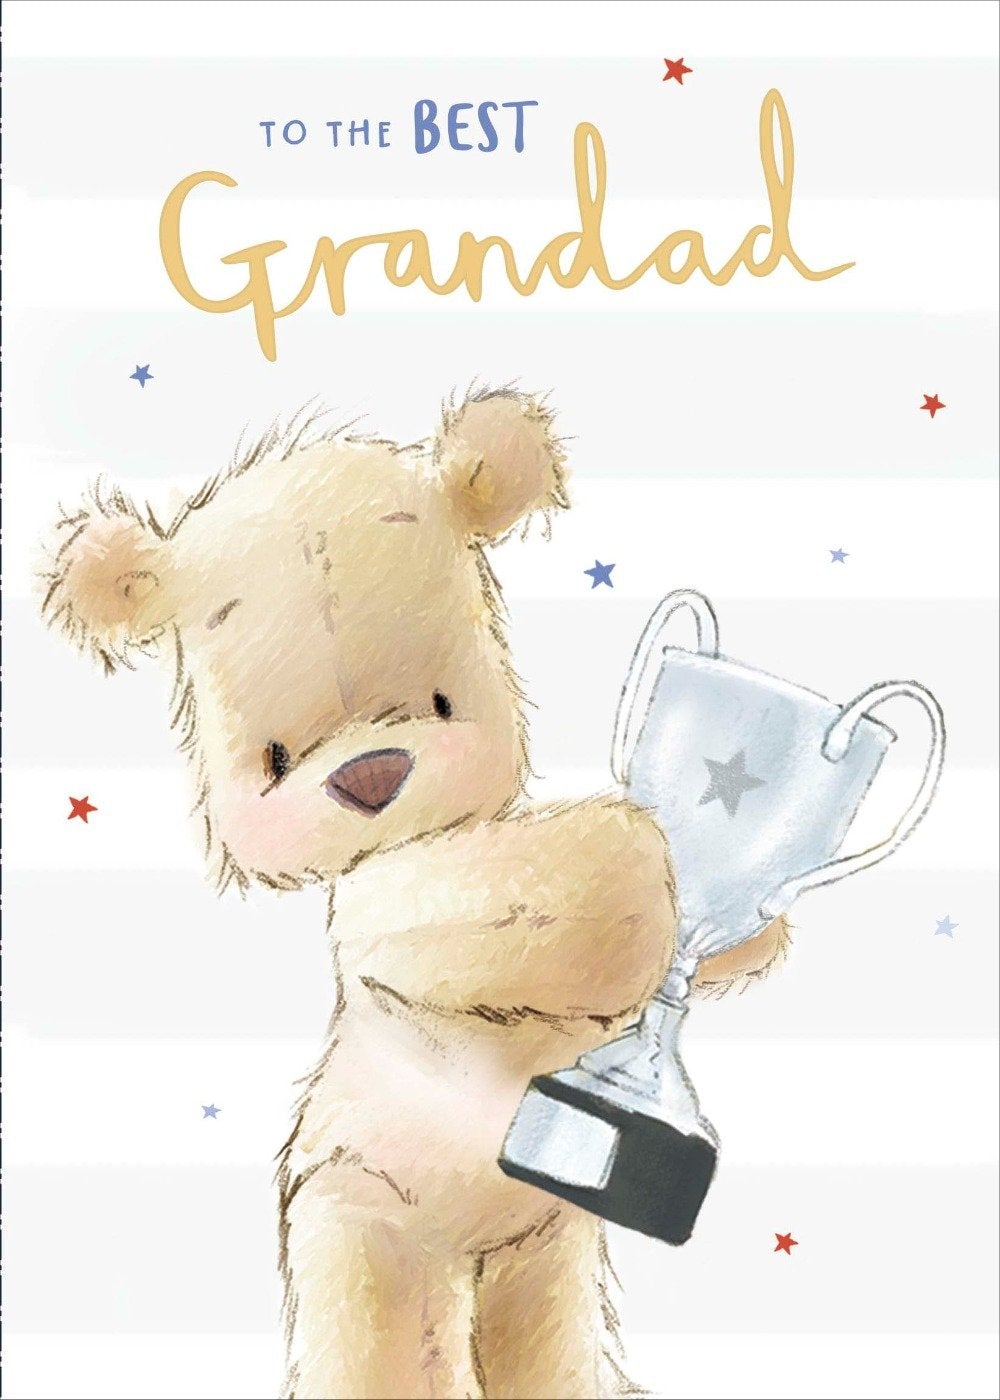 Fathers Day Card - Grandad / A Teddy Holding A Silver Trophy